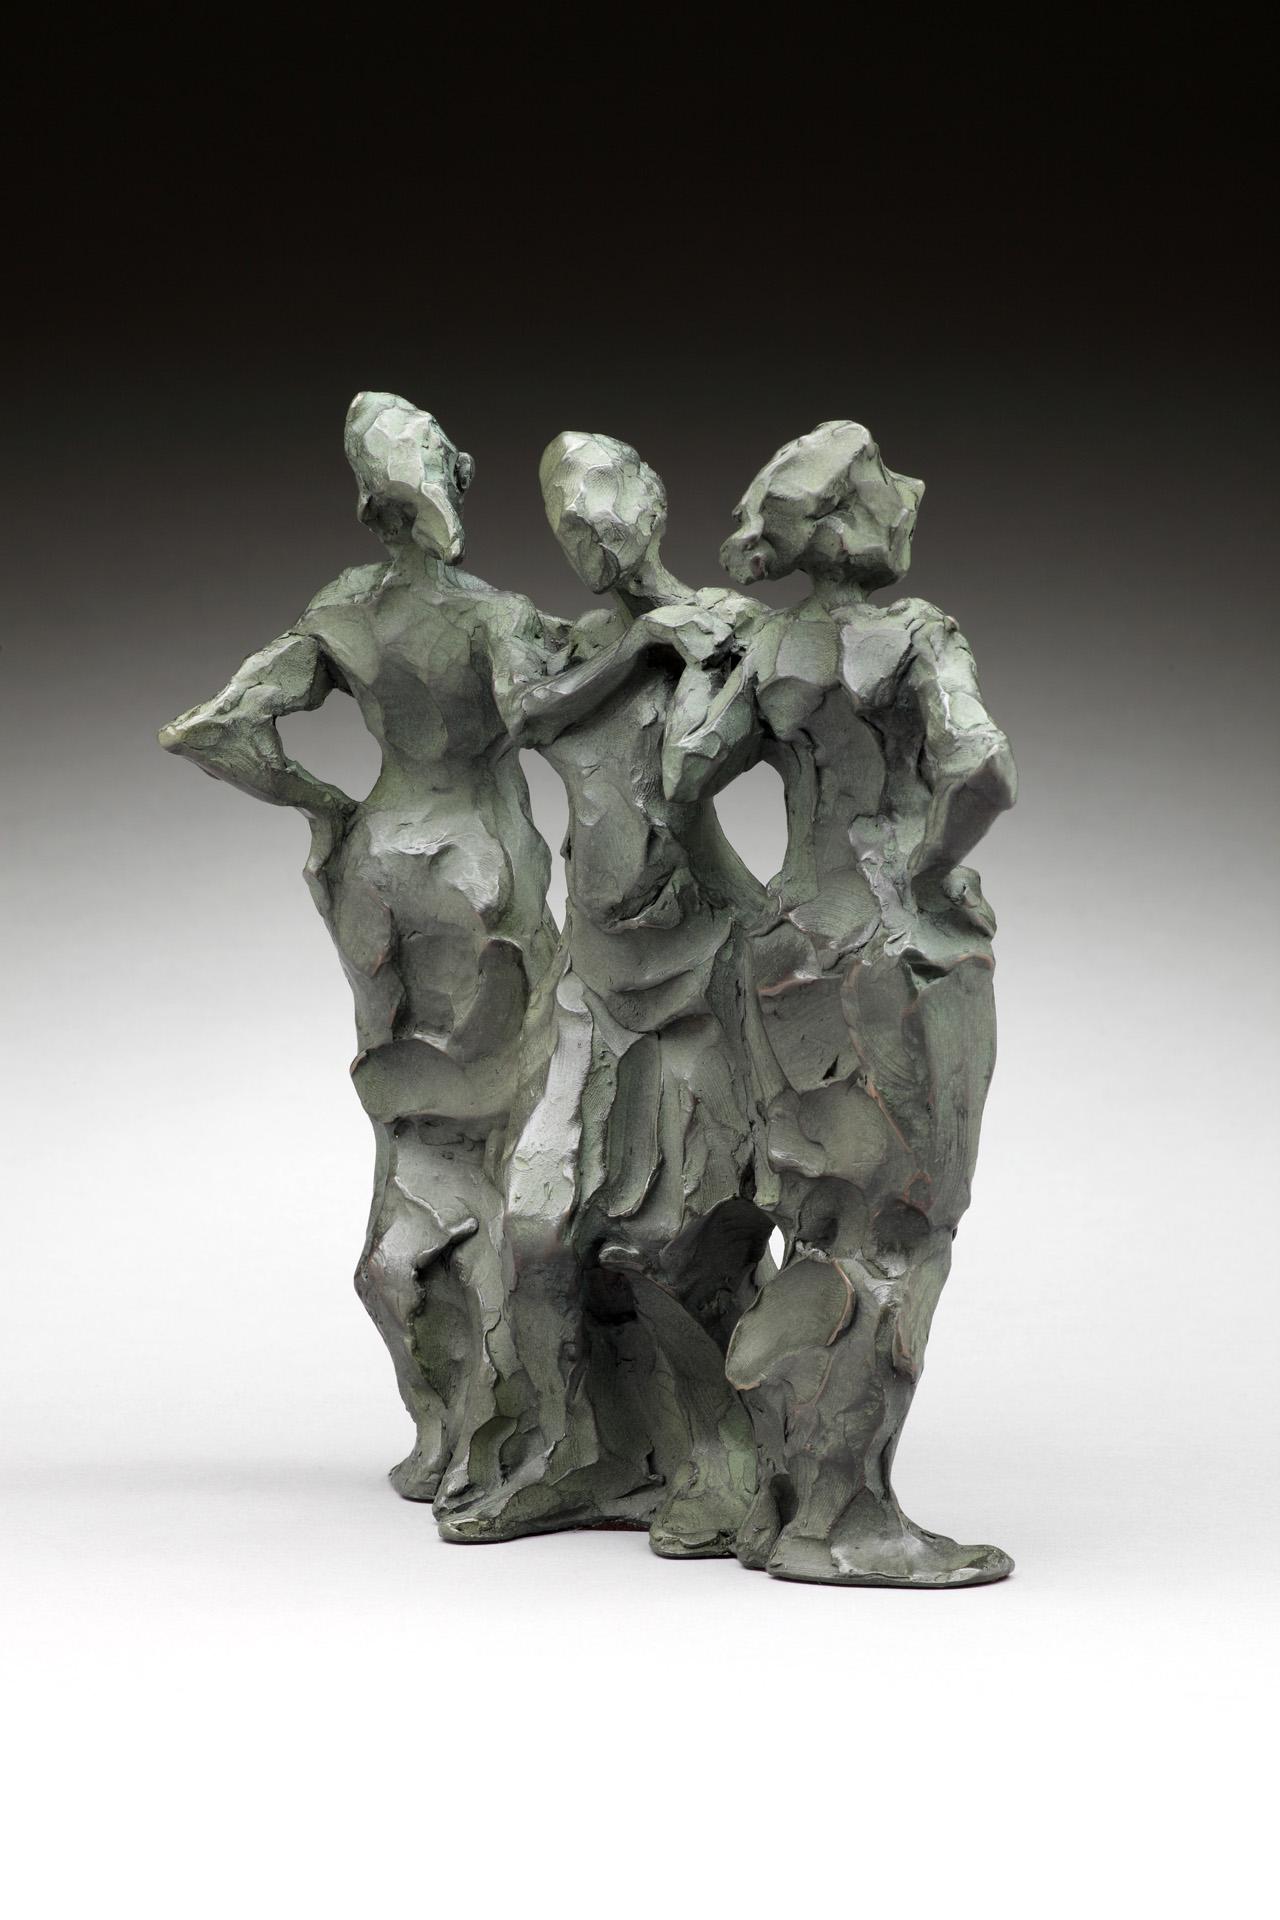 Three Graces by Jane DeDecker
Abstract Figurative Bronze 10x9x3